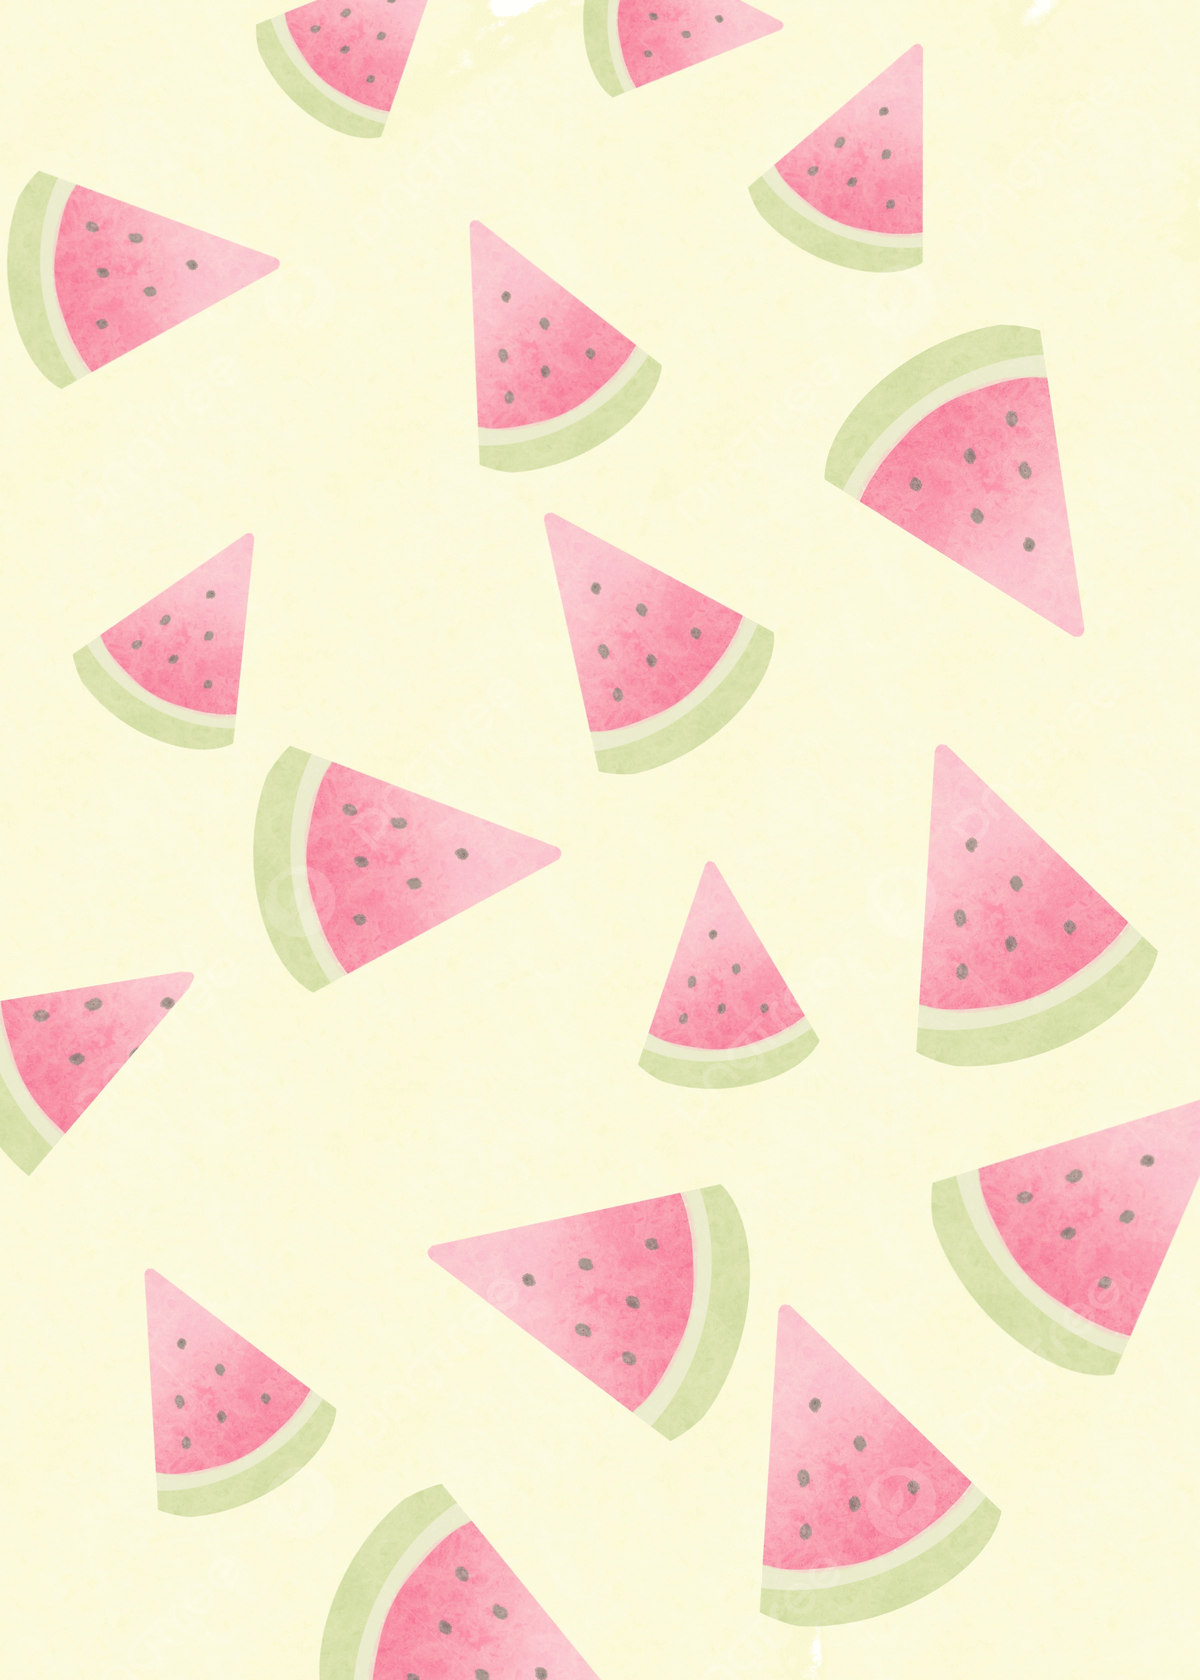 A watermelon pattern on the wall - Watermelon